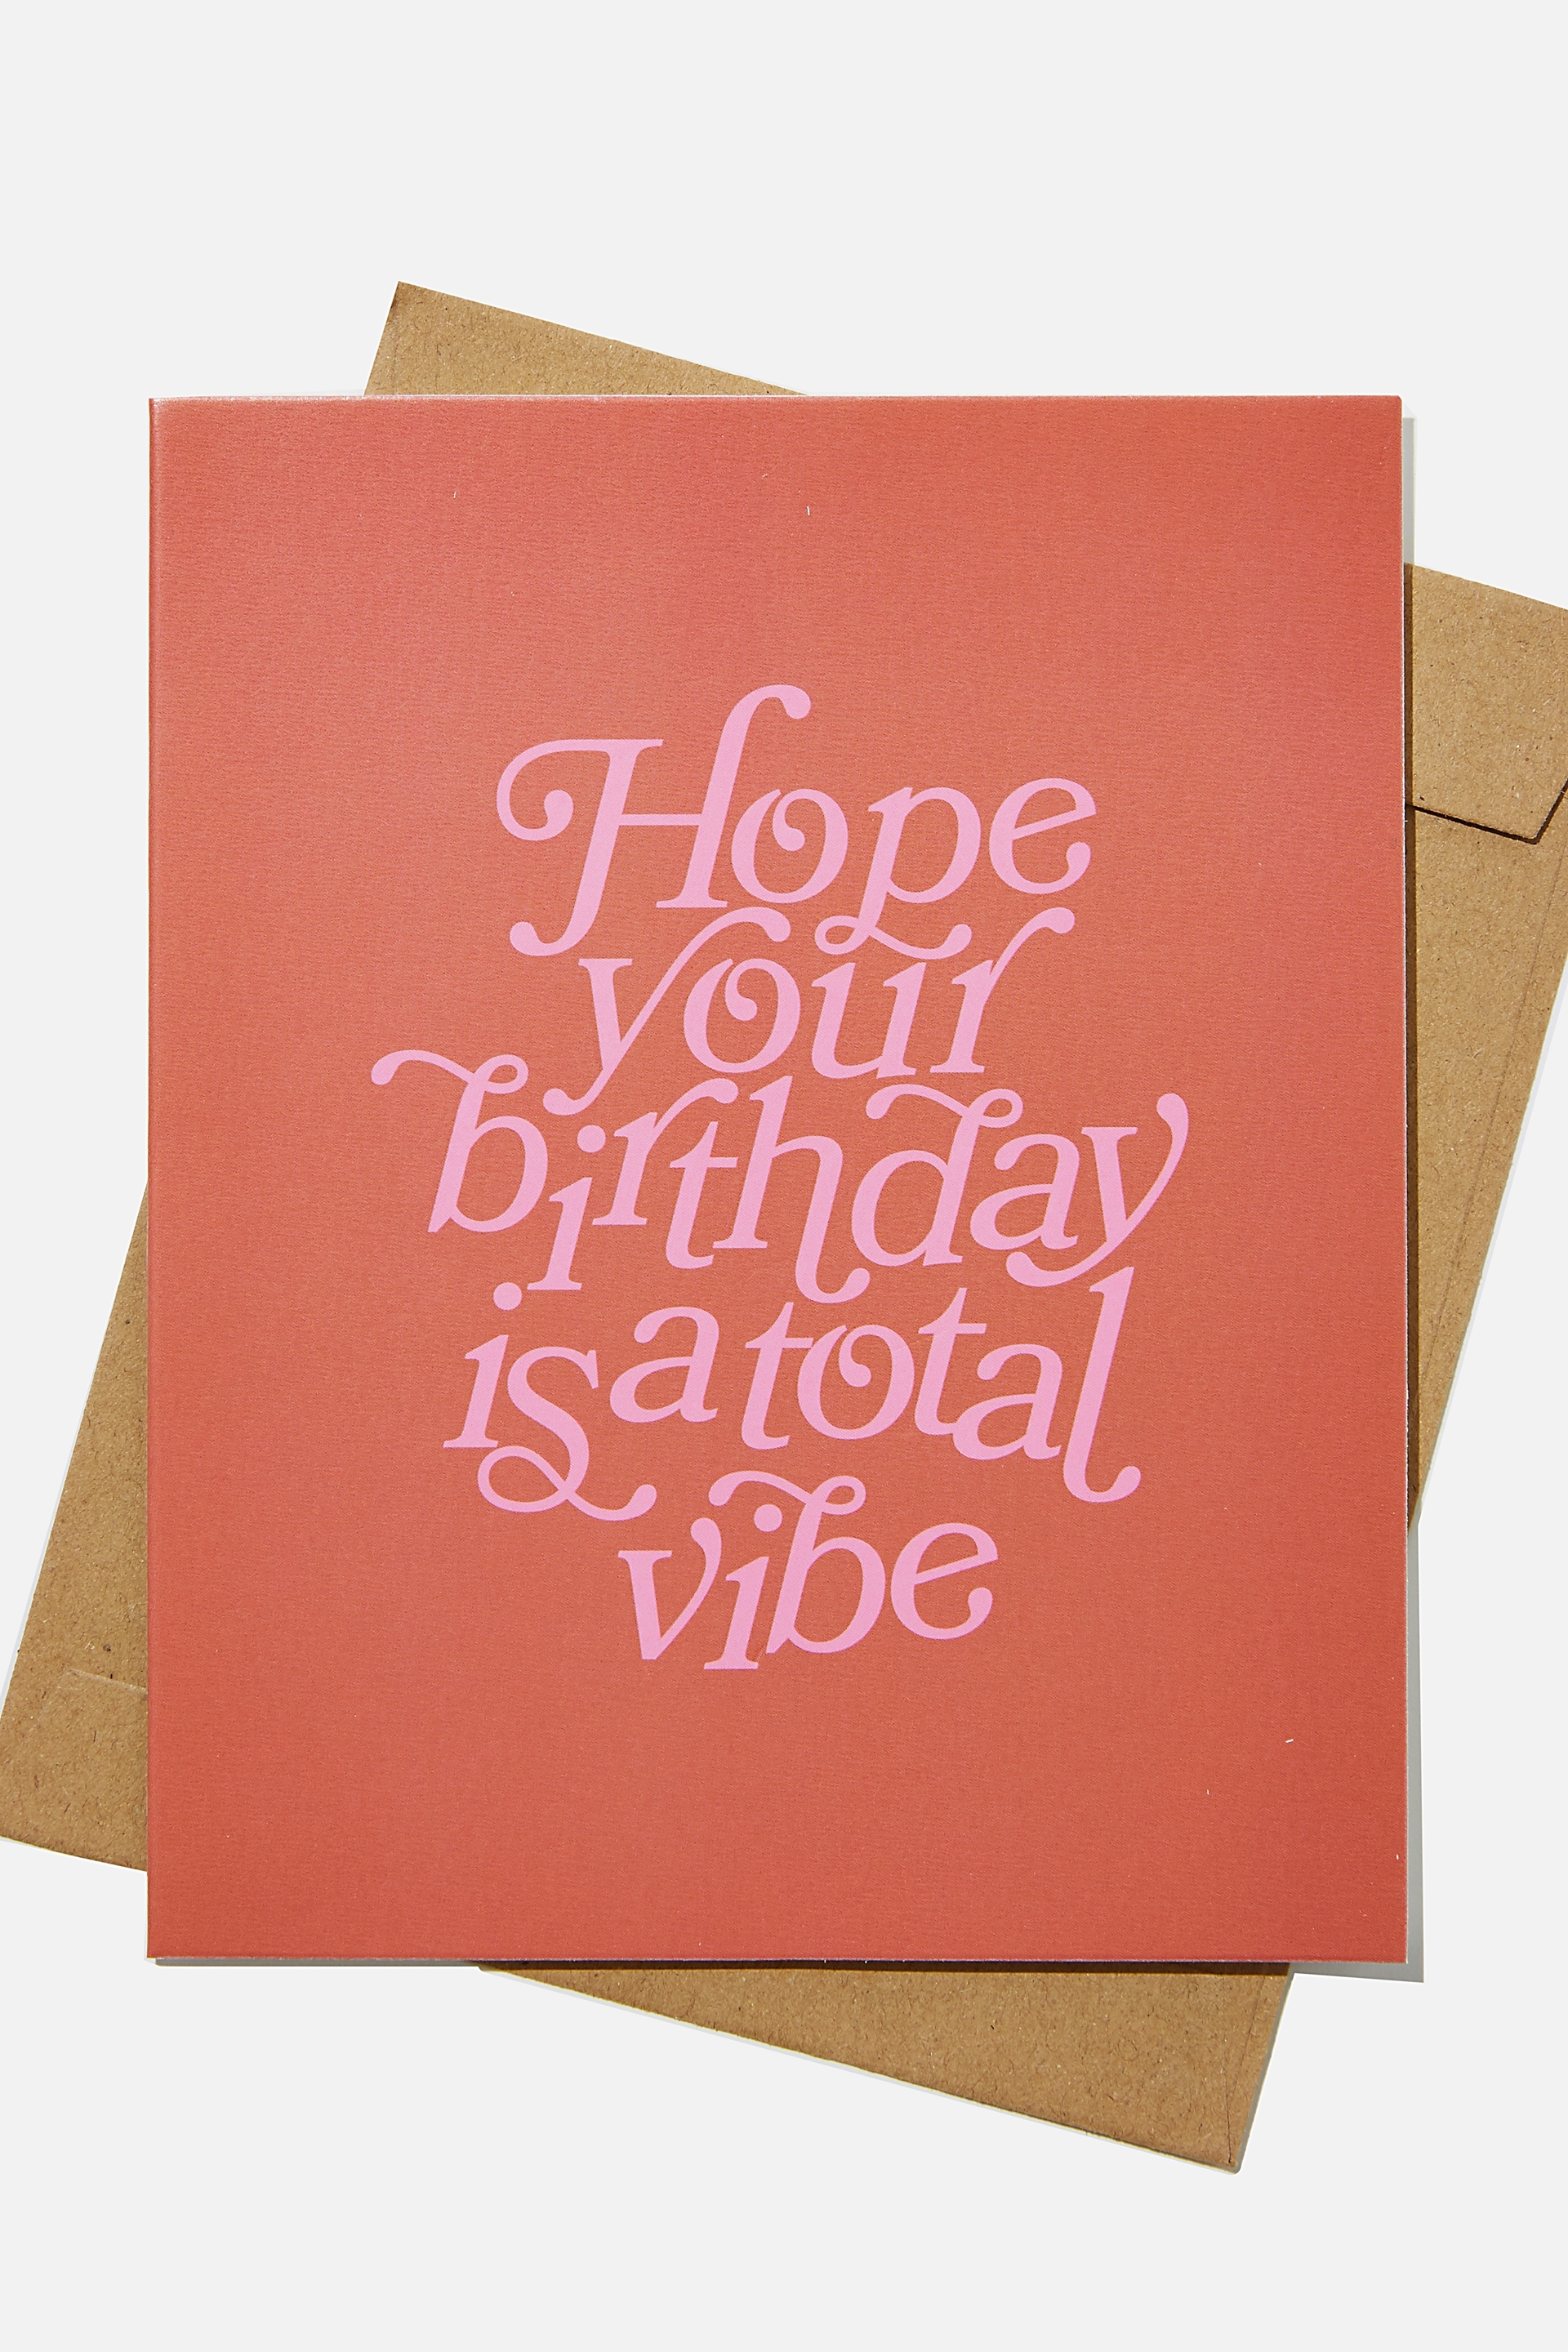 Typo - Nice Birthday Card - Total vibe birthday